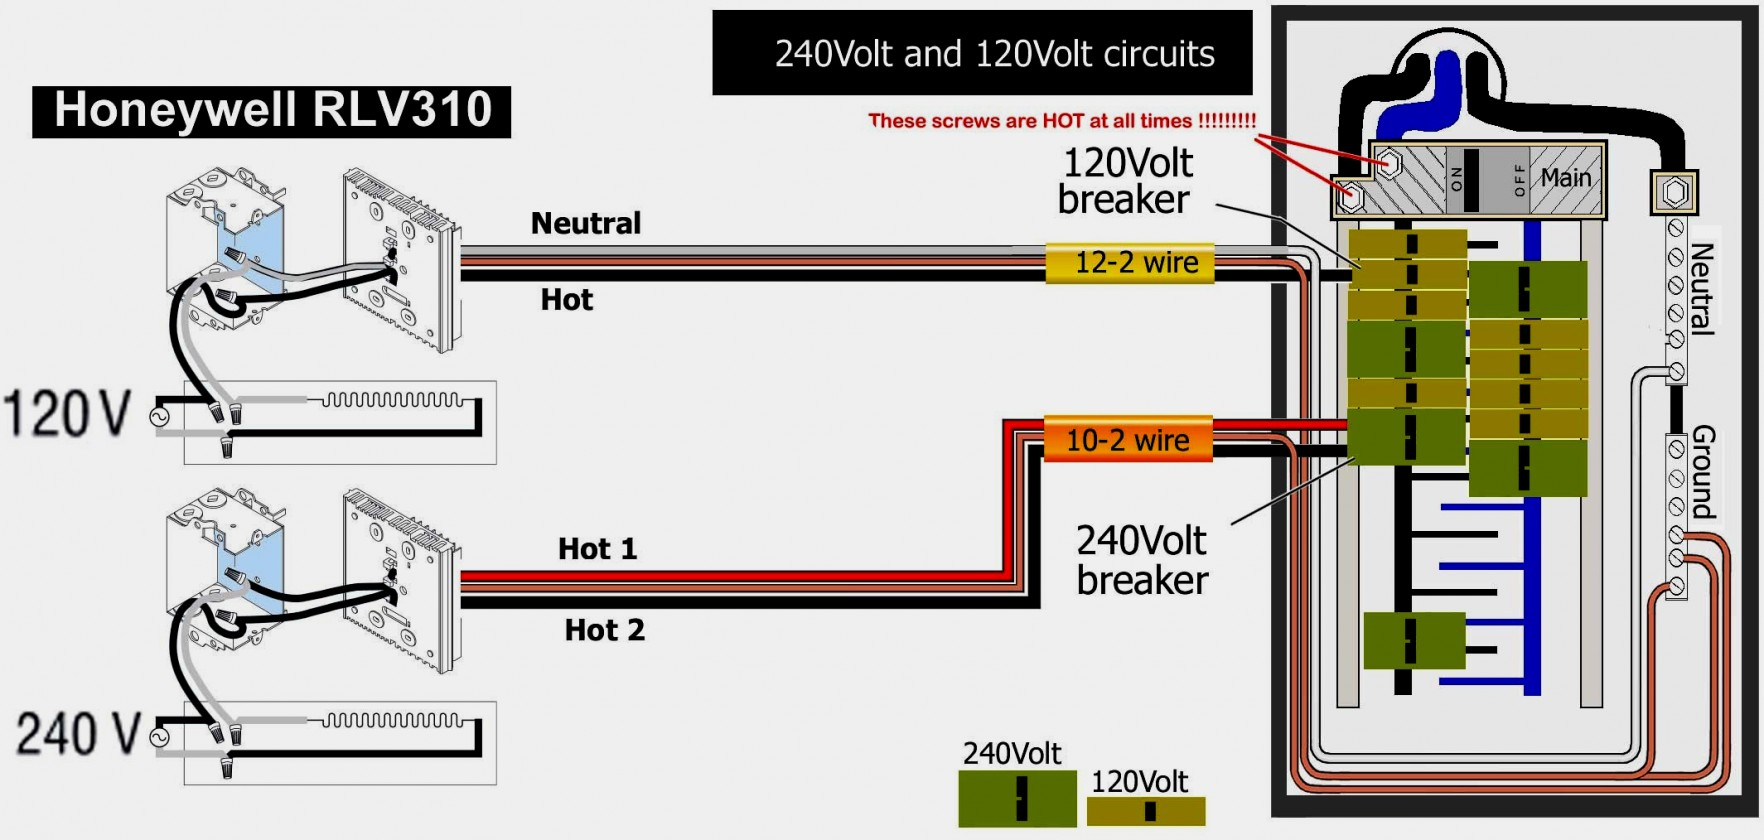 240V Heater Wiring Diagram | Wiring Diagram - 240 Volt Heater Wiring Diagram